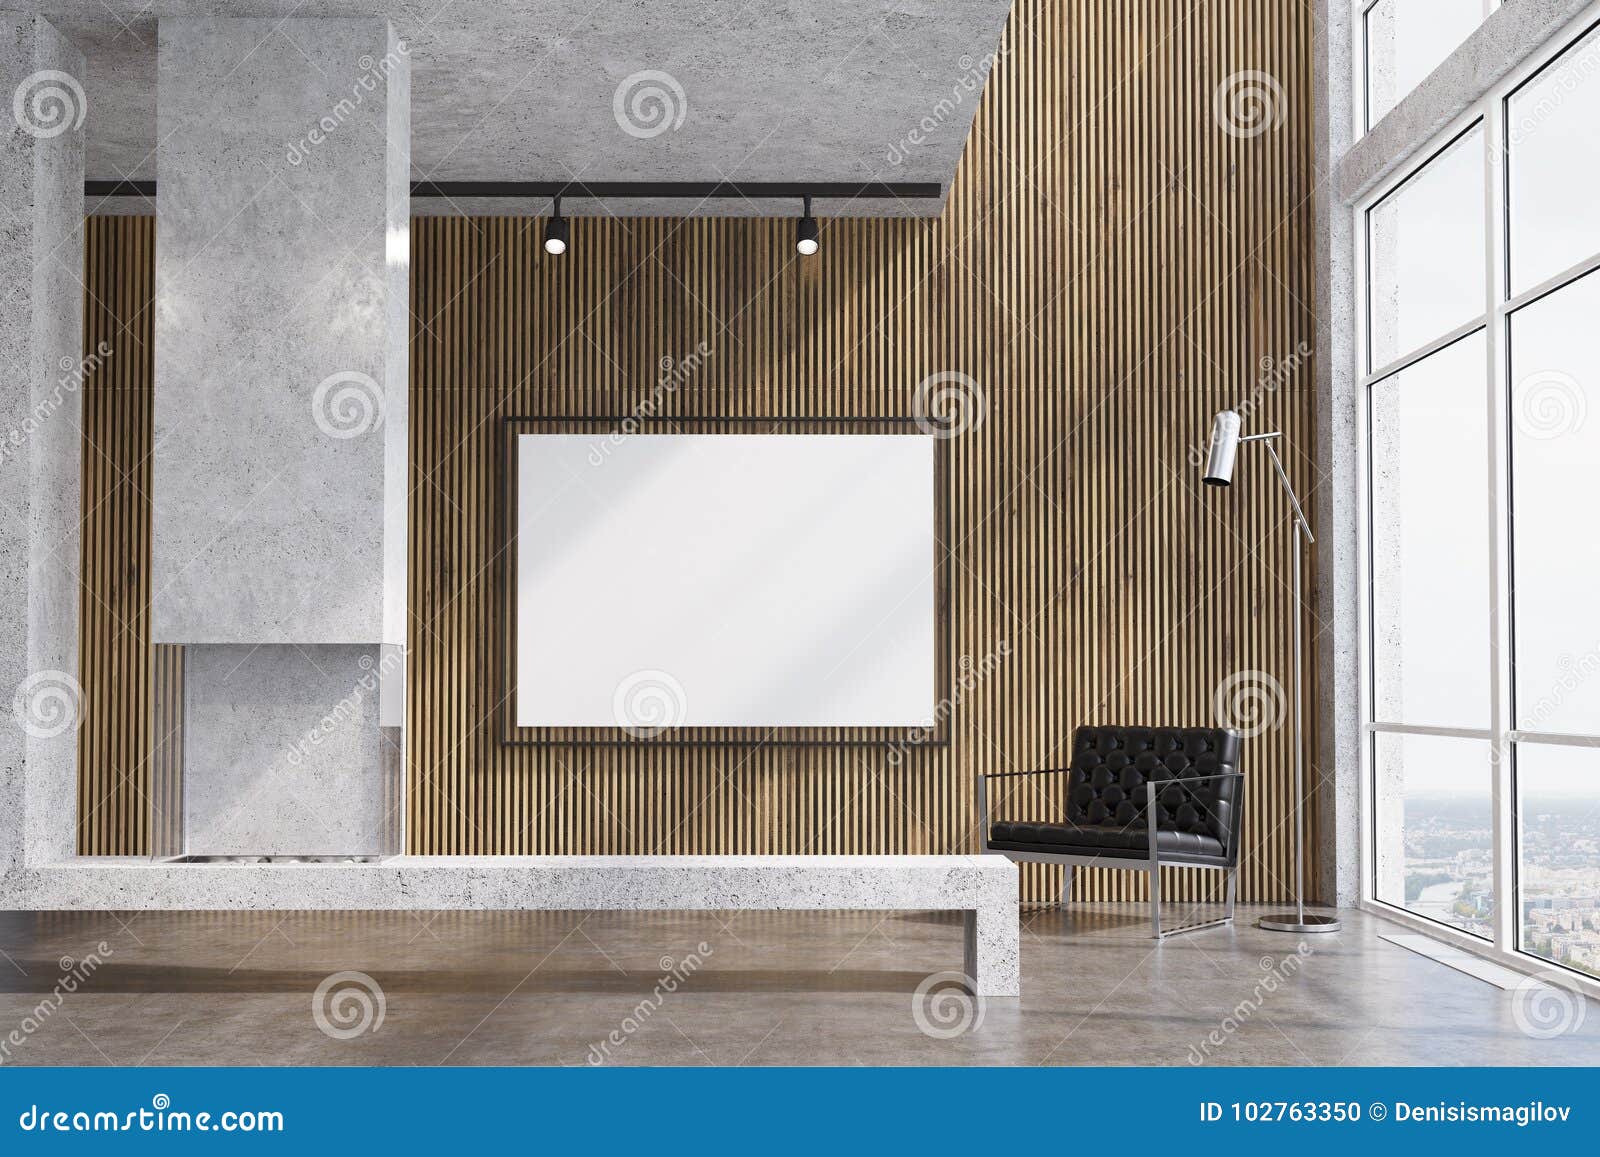 Wooden Living Room Tv Set Fireplace Stock Illustration